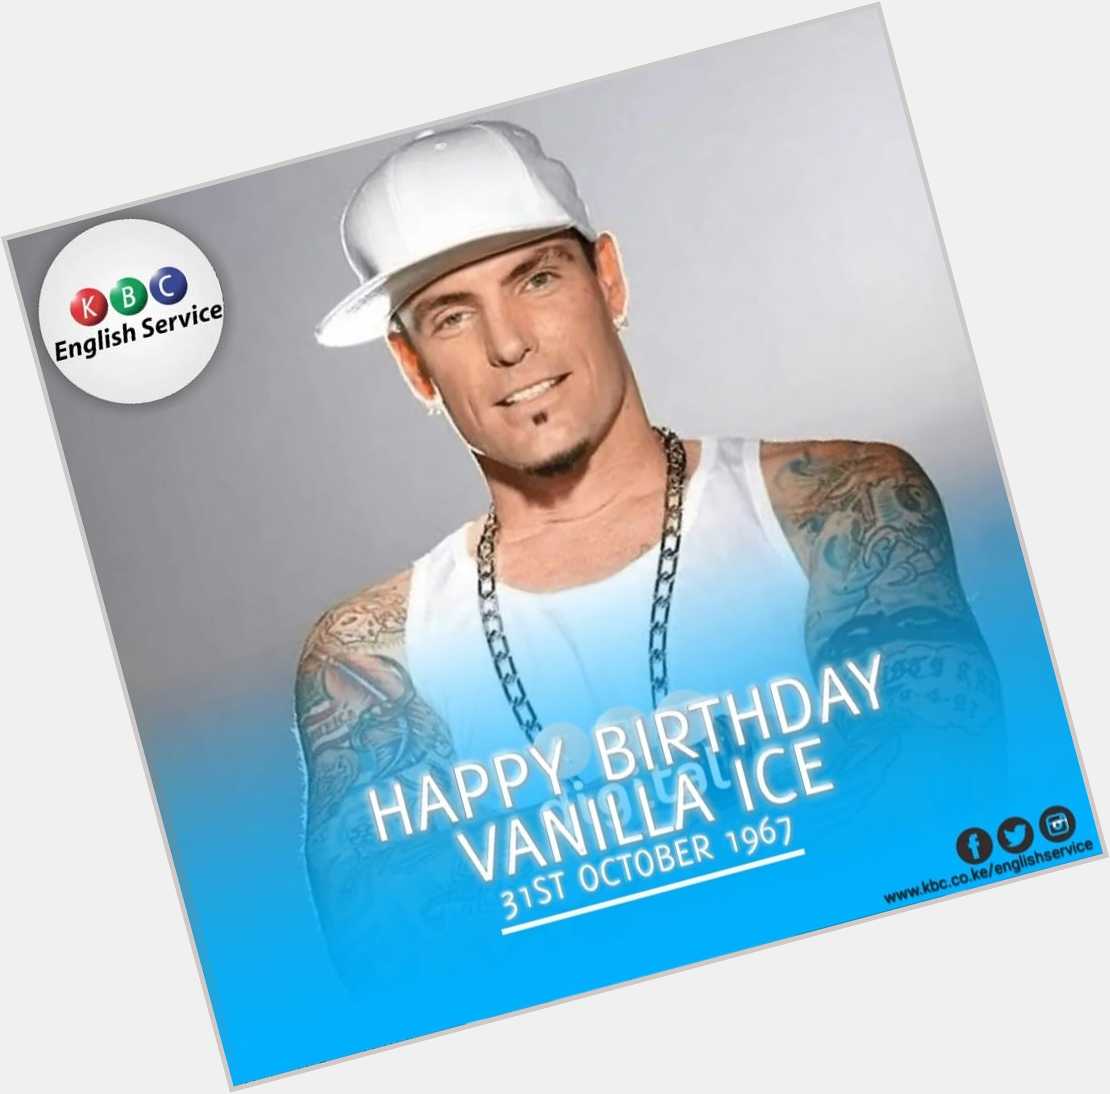 Happy Birthday: VANILLA ICE
Born: 31st October 1967

^PMN   